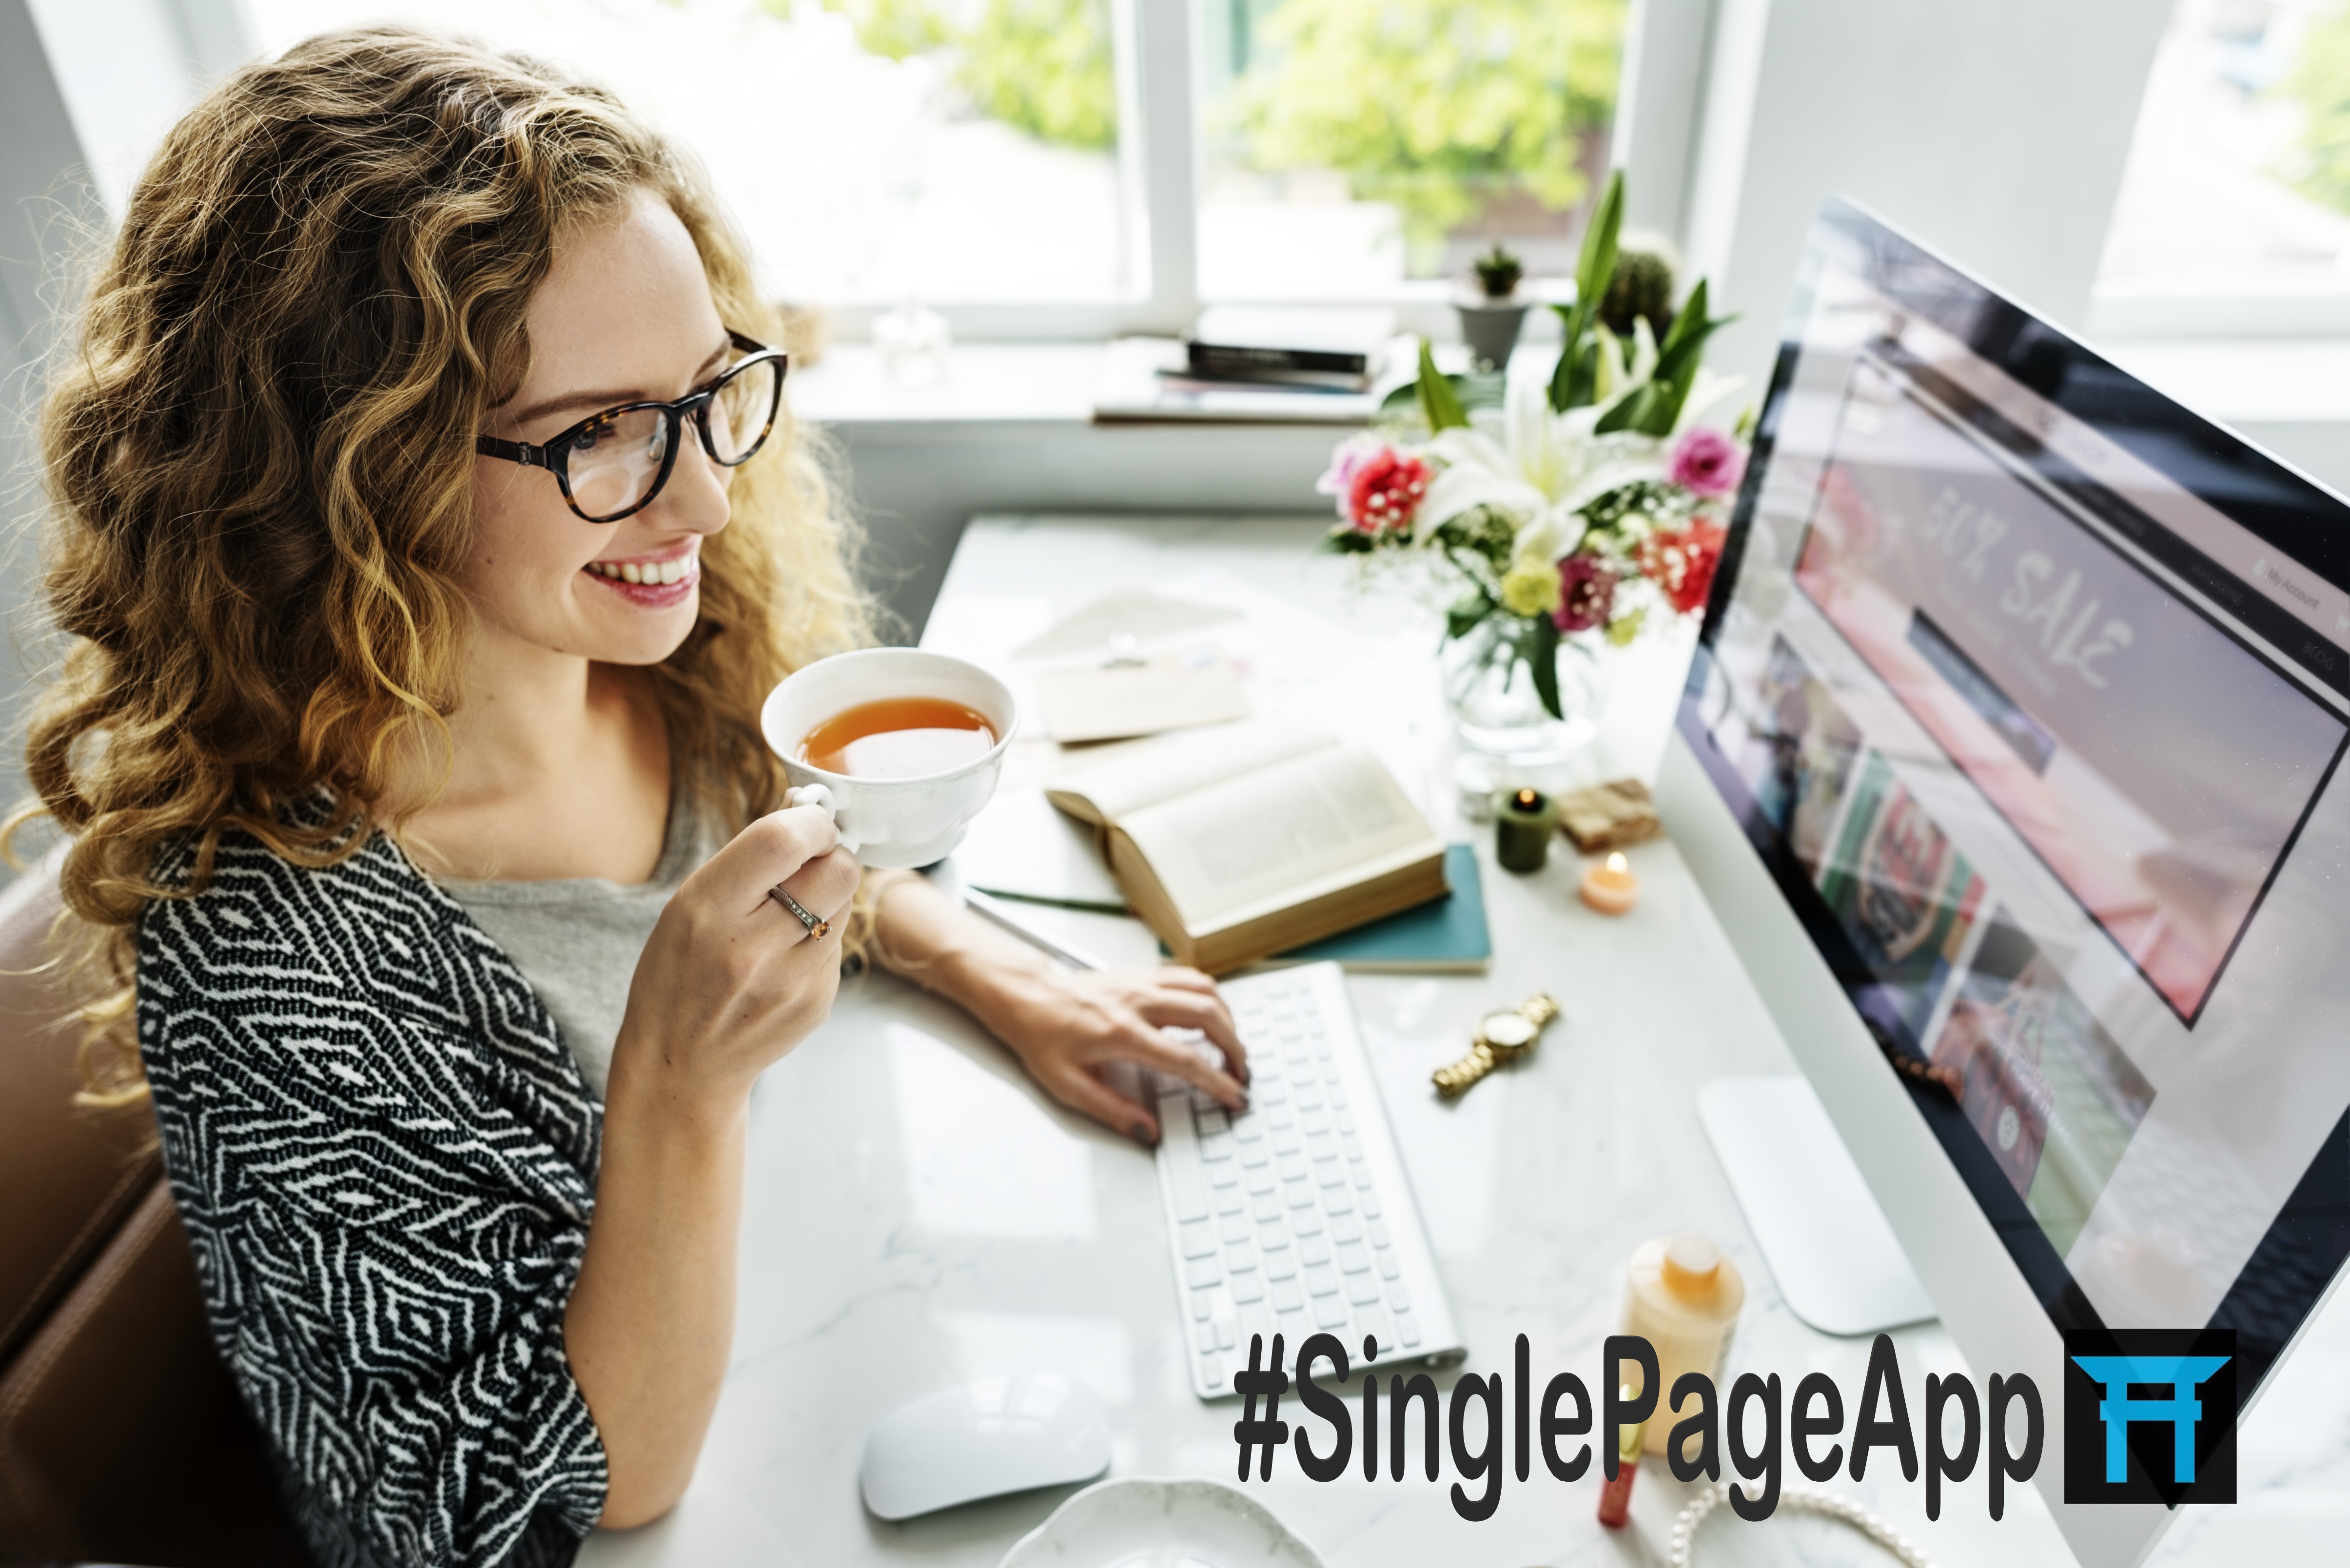 SinglePage